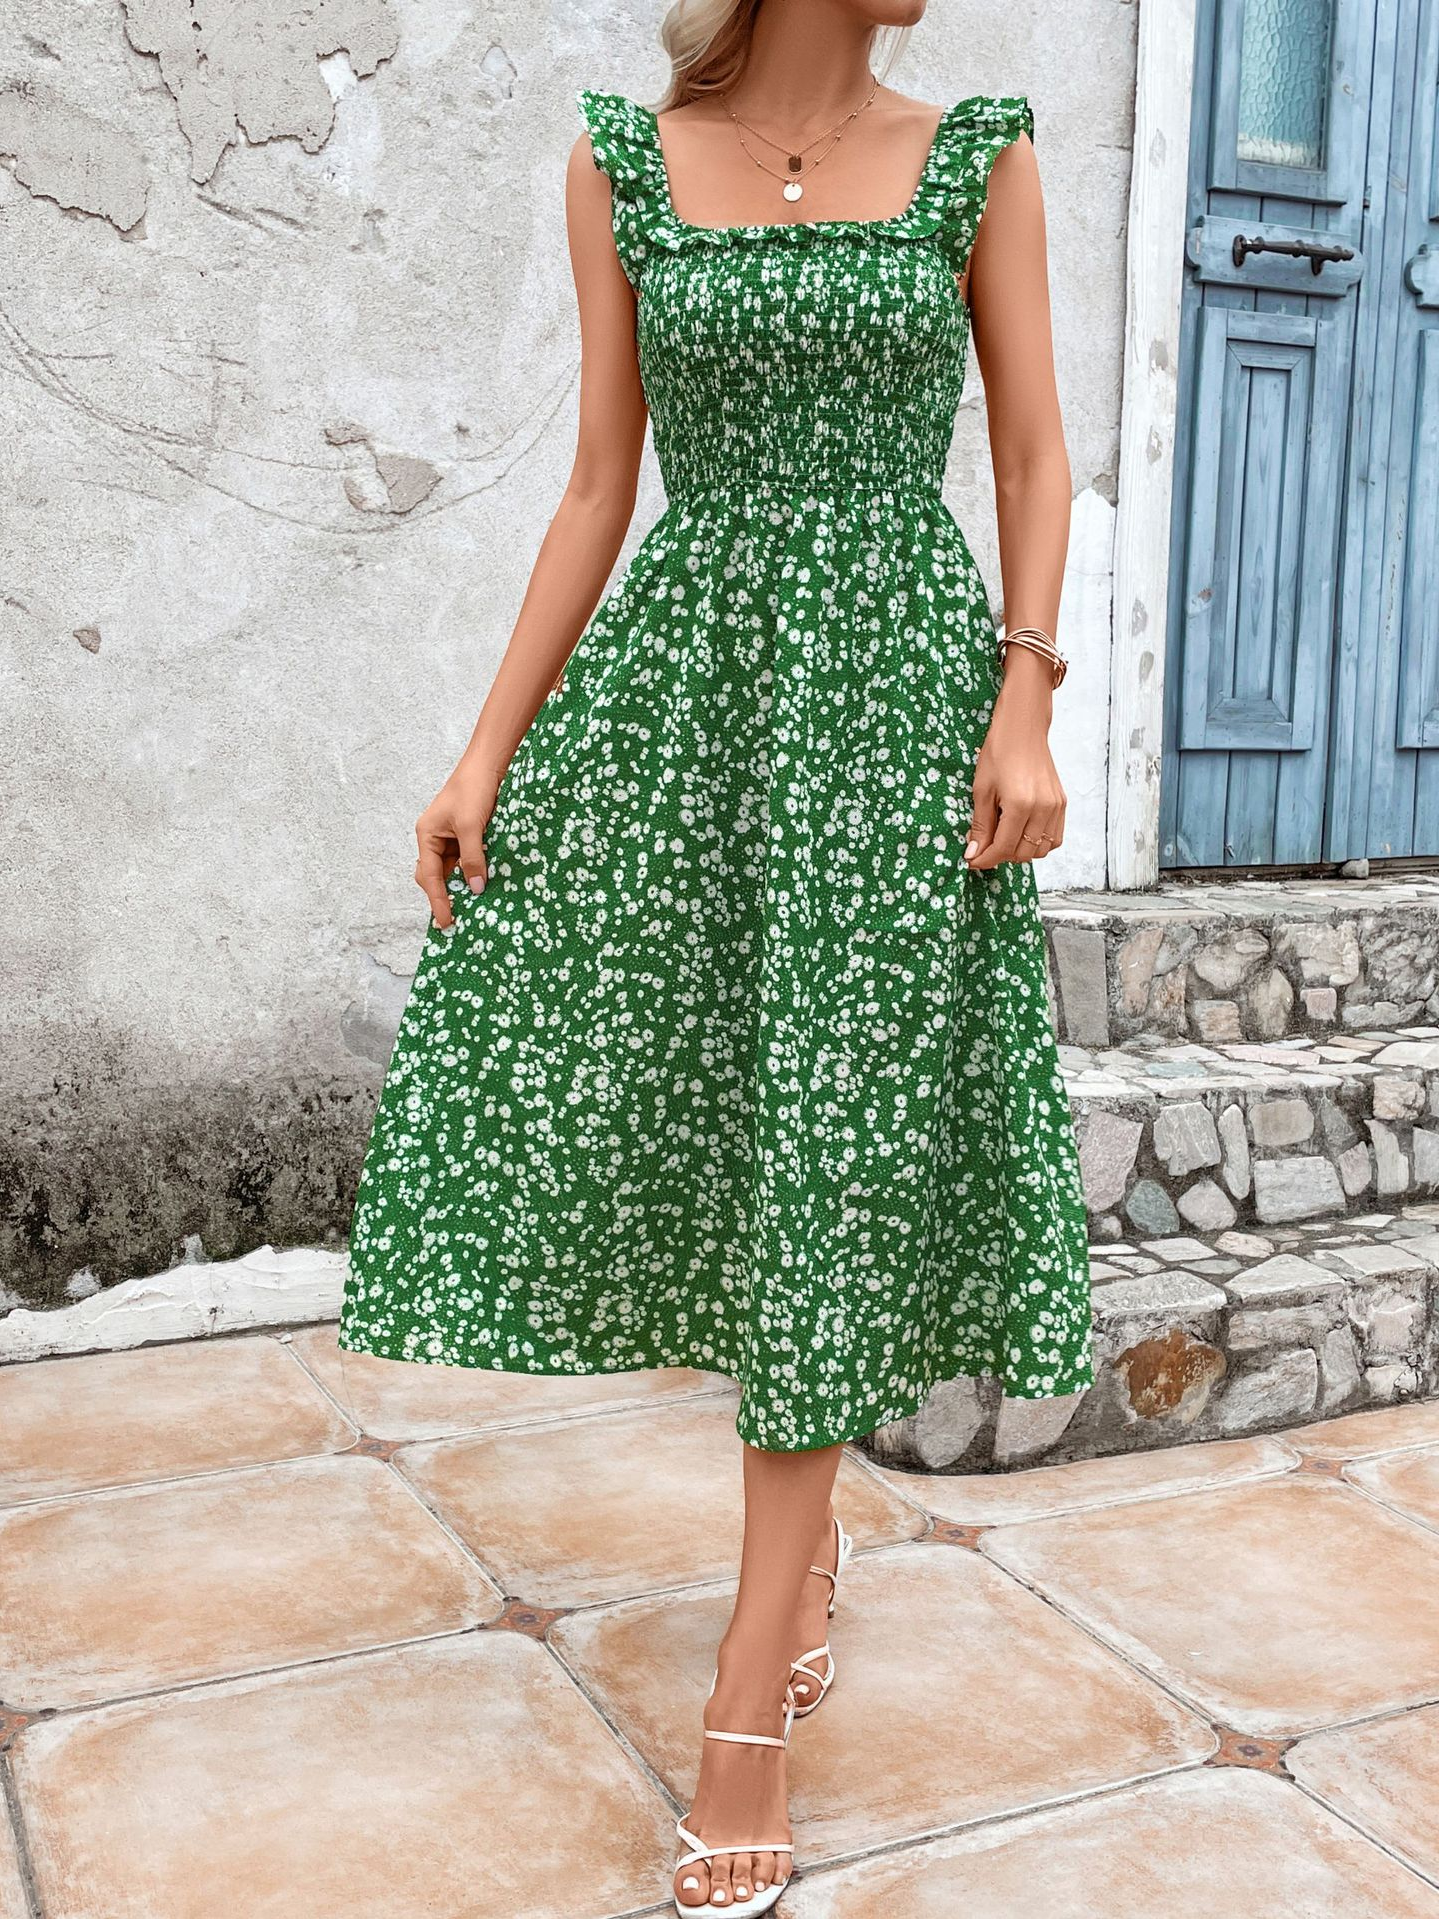 Stunning Green Ruffled Neckline Sleeveless Dress